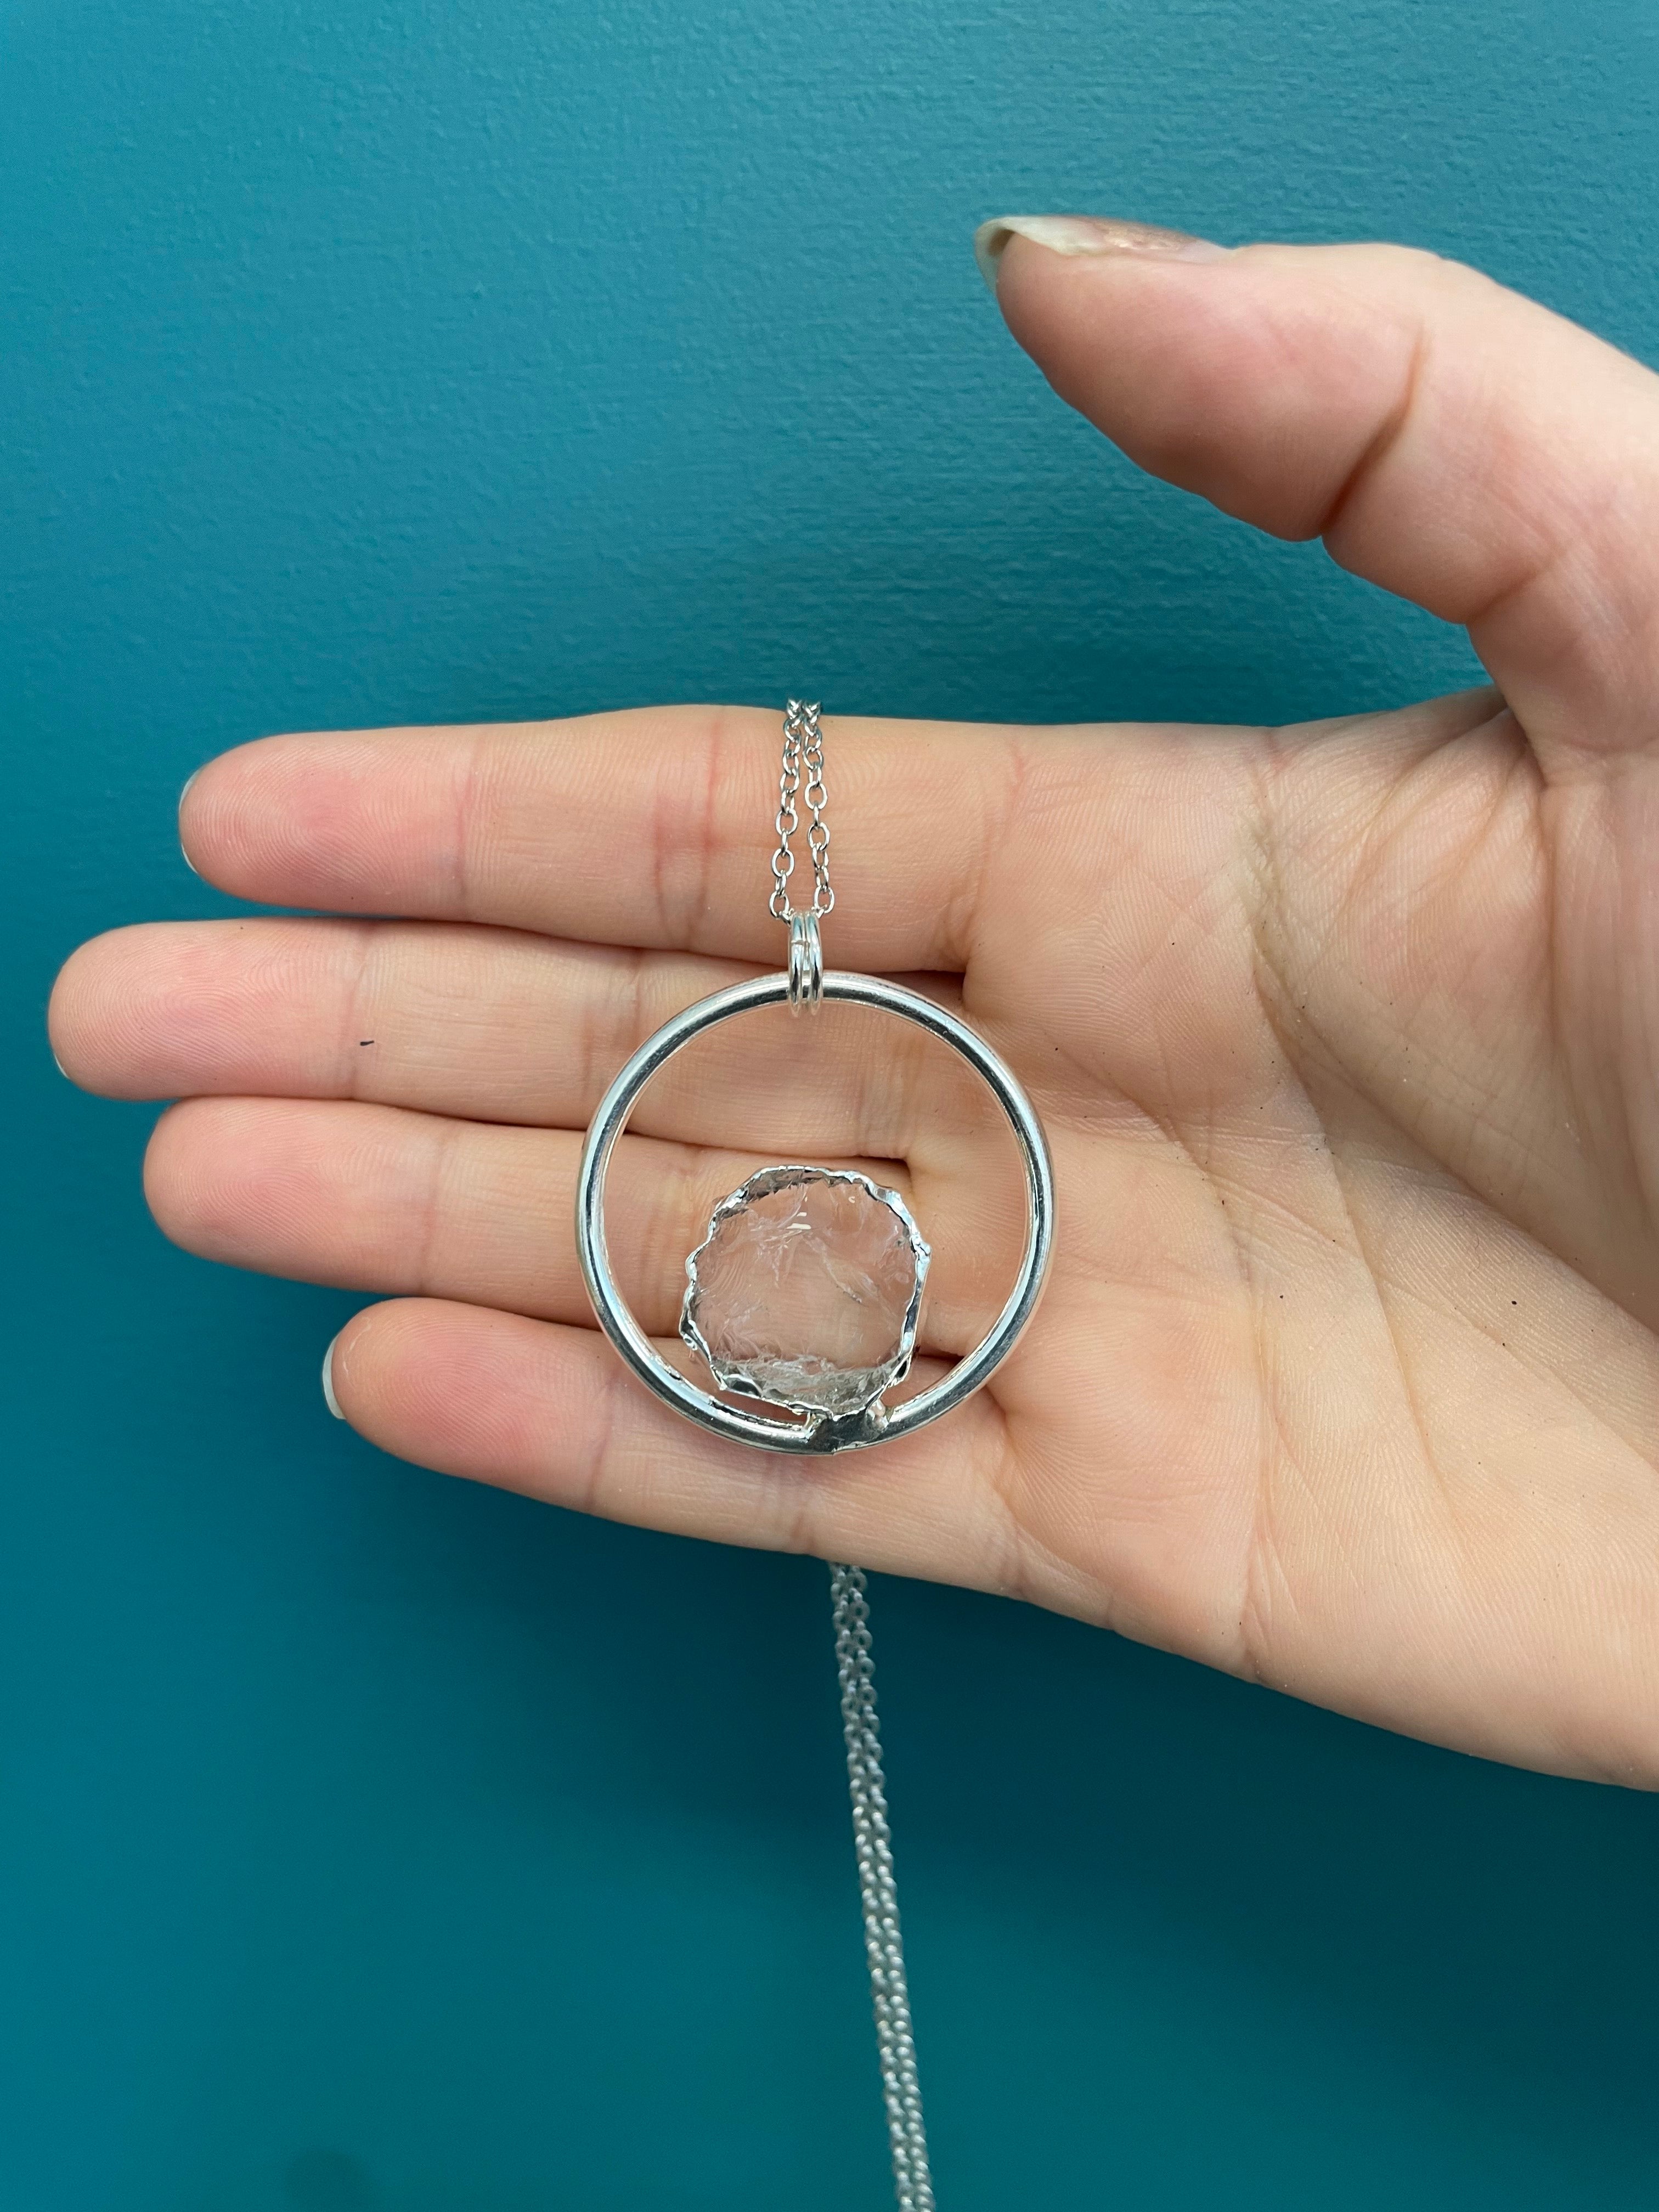 Whole Store Clear Quartz Silver Ring Pendant Necklace